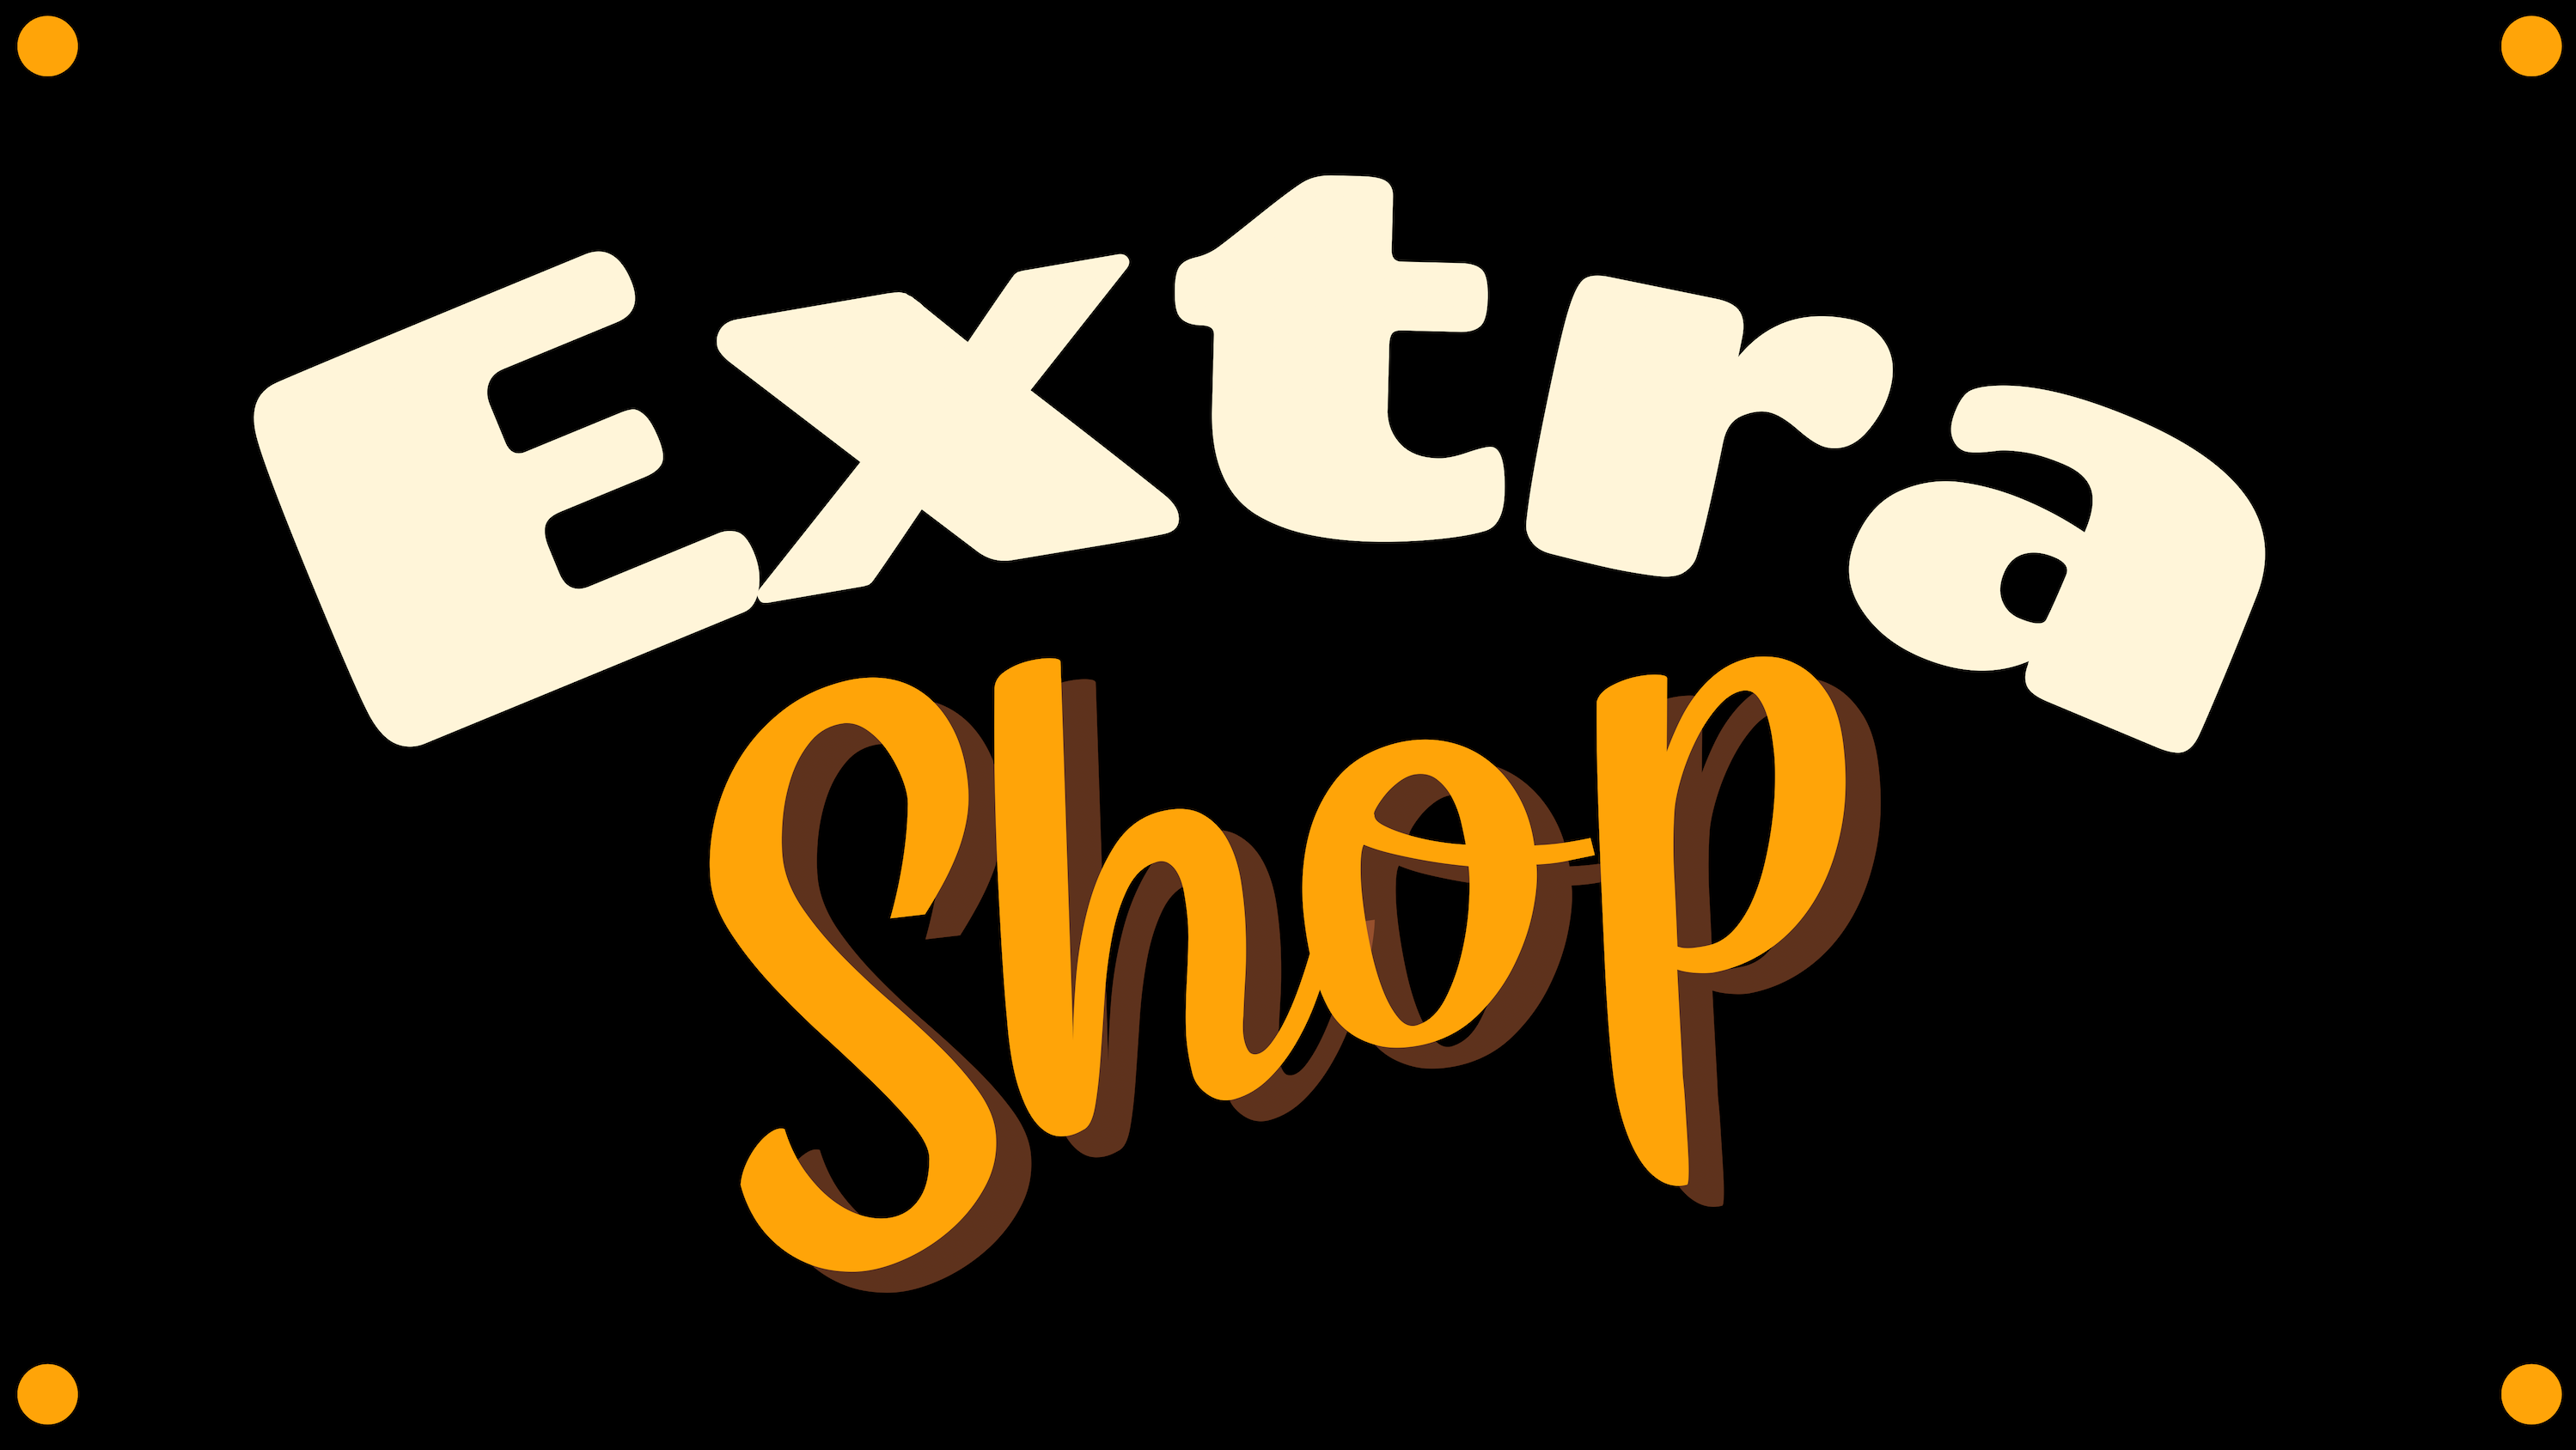 ExtraShop